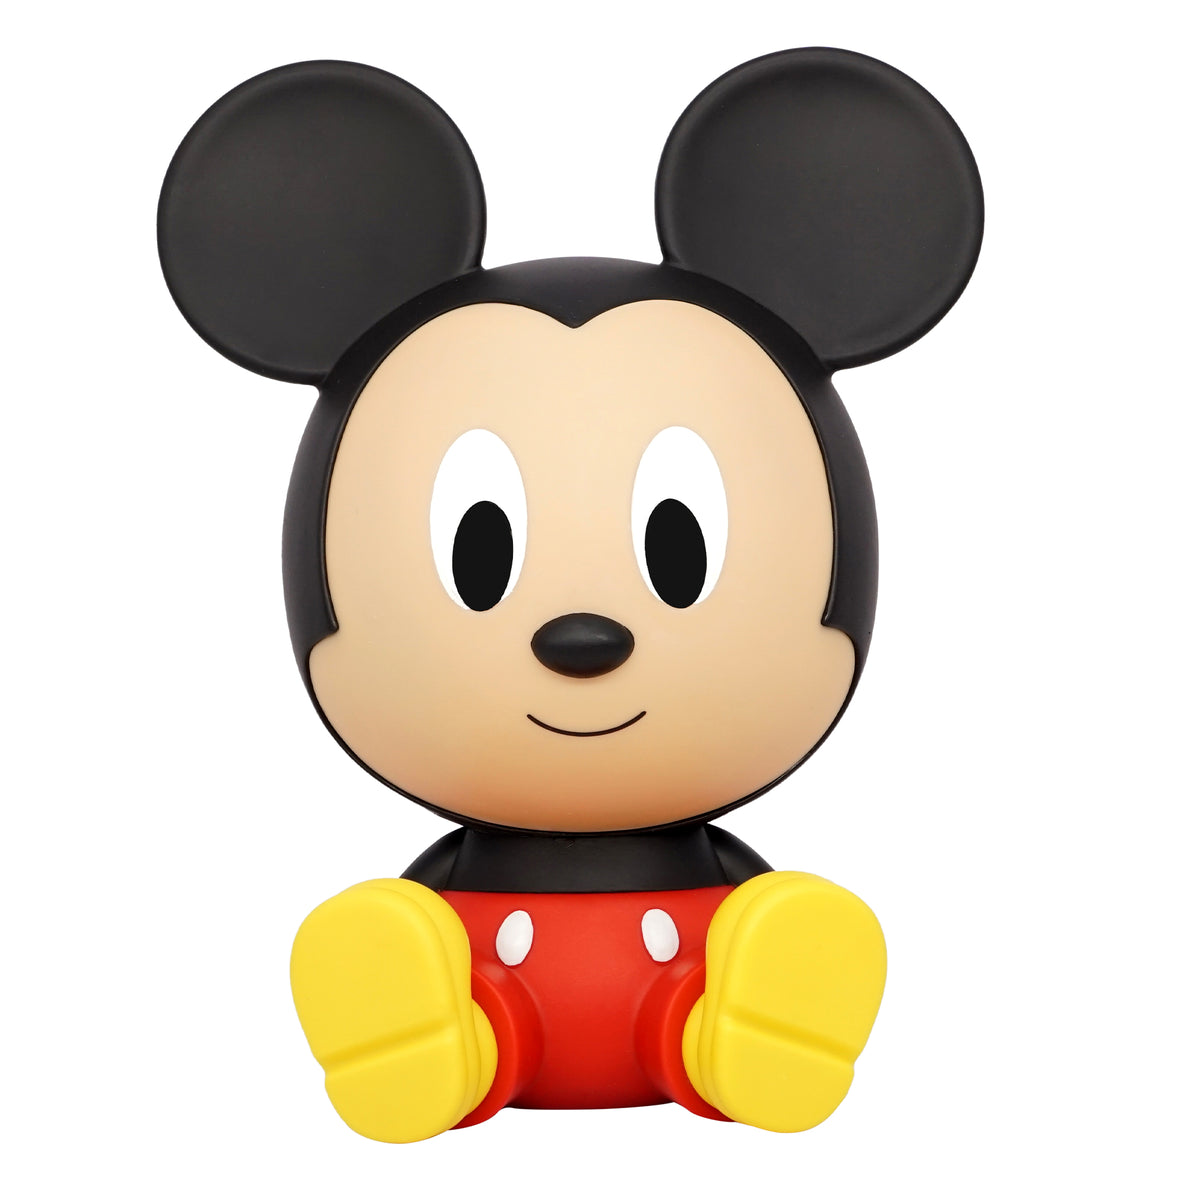 Disney Mickey Mouse Figural Display Bank